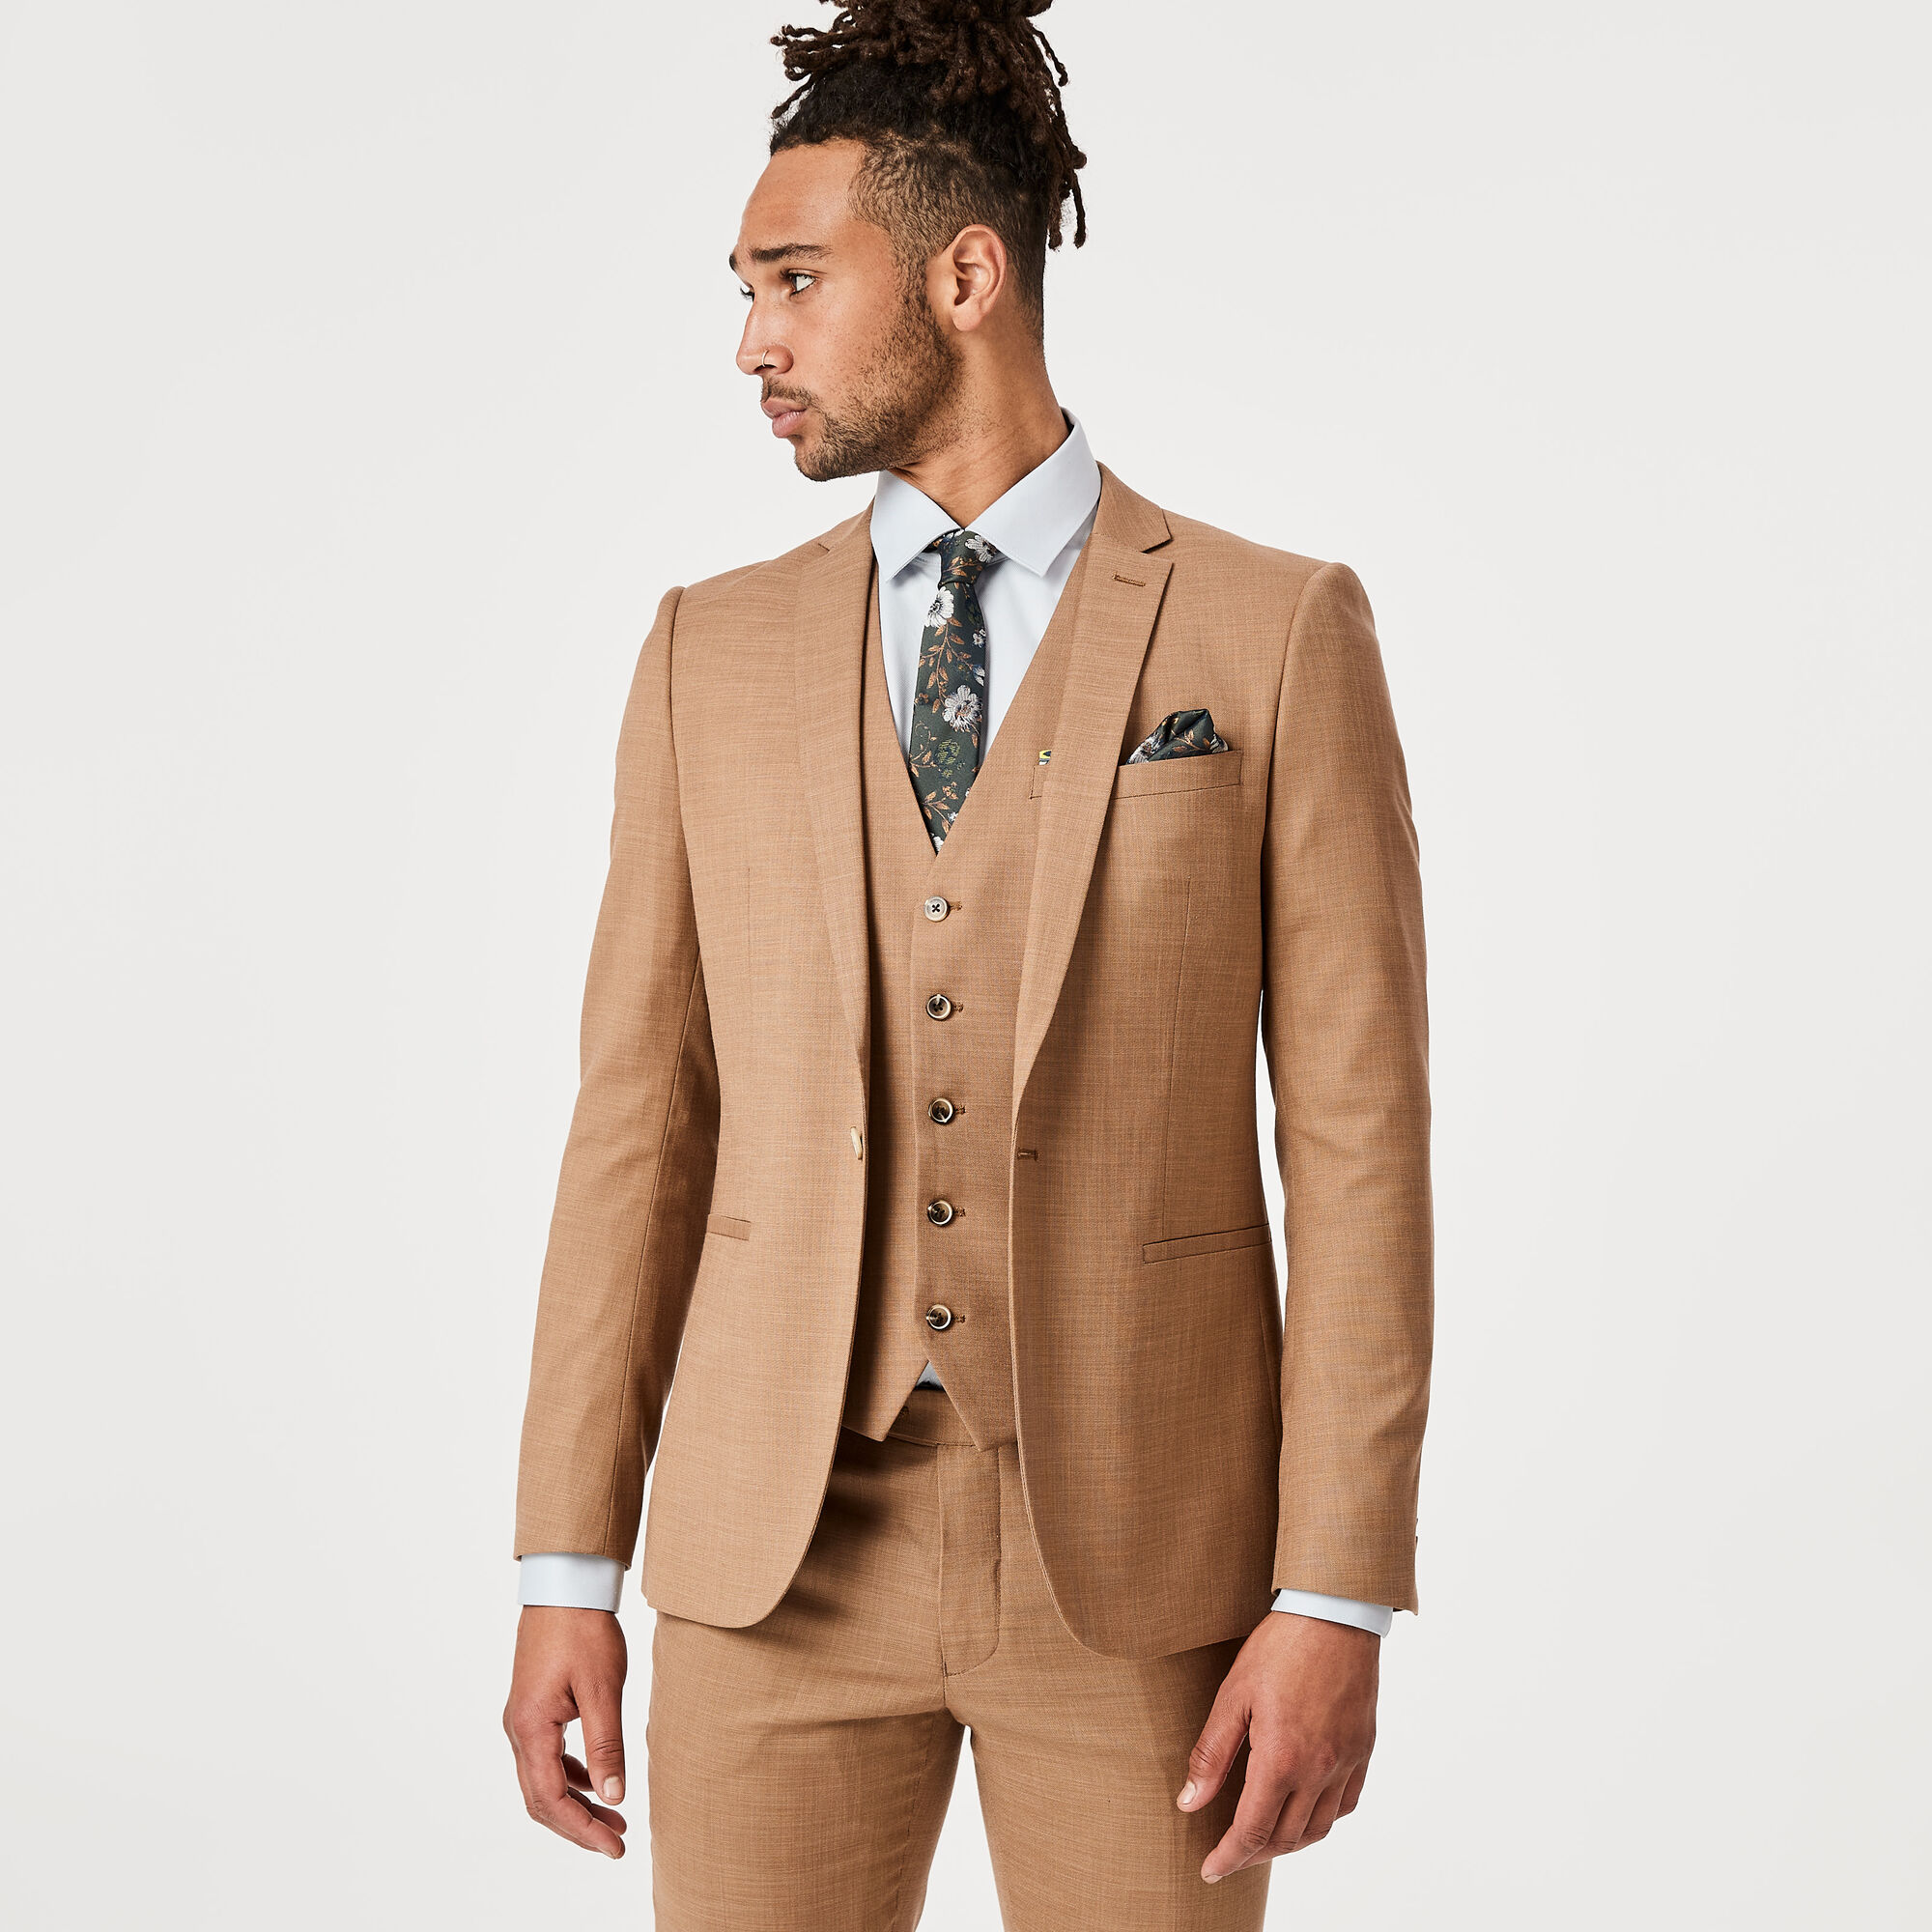 Alvi Suit Jacket - Camel - Ultra Slim Tailored Jacket Notched | Suit Jackets  | Politix